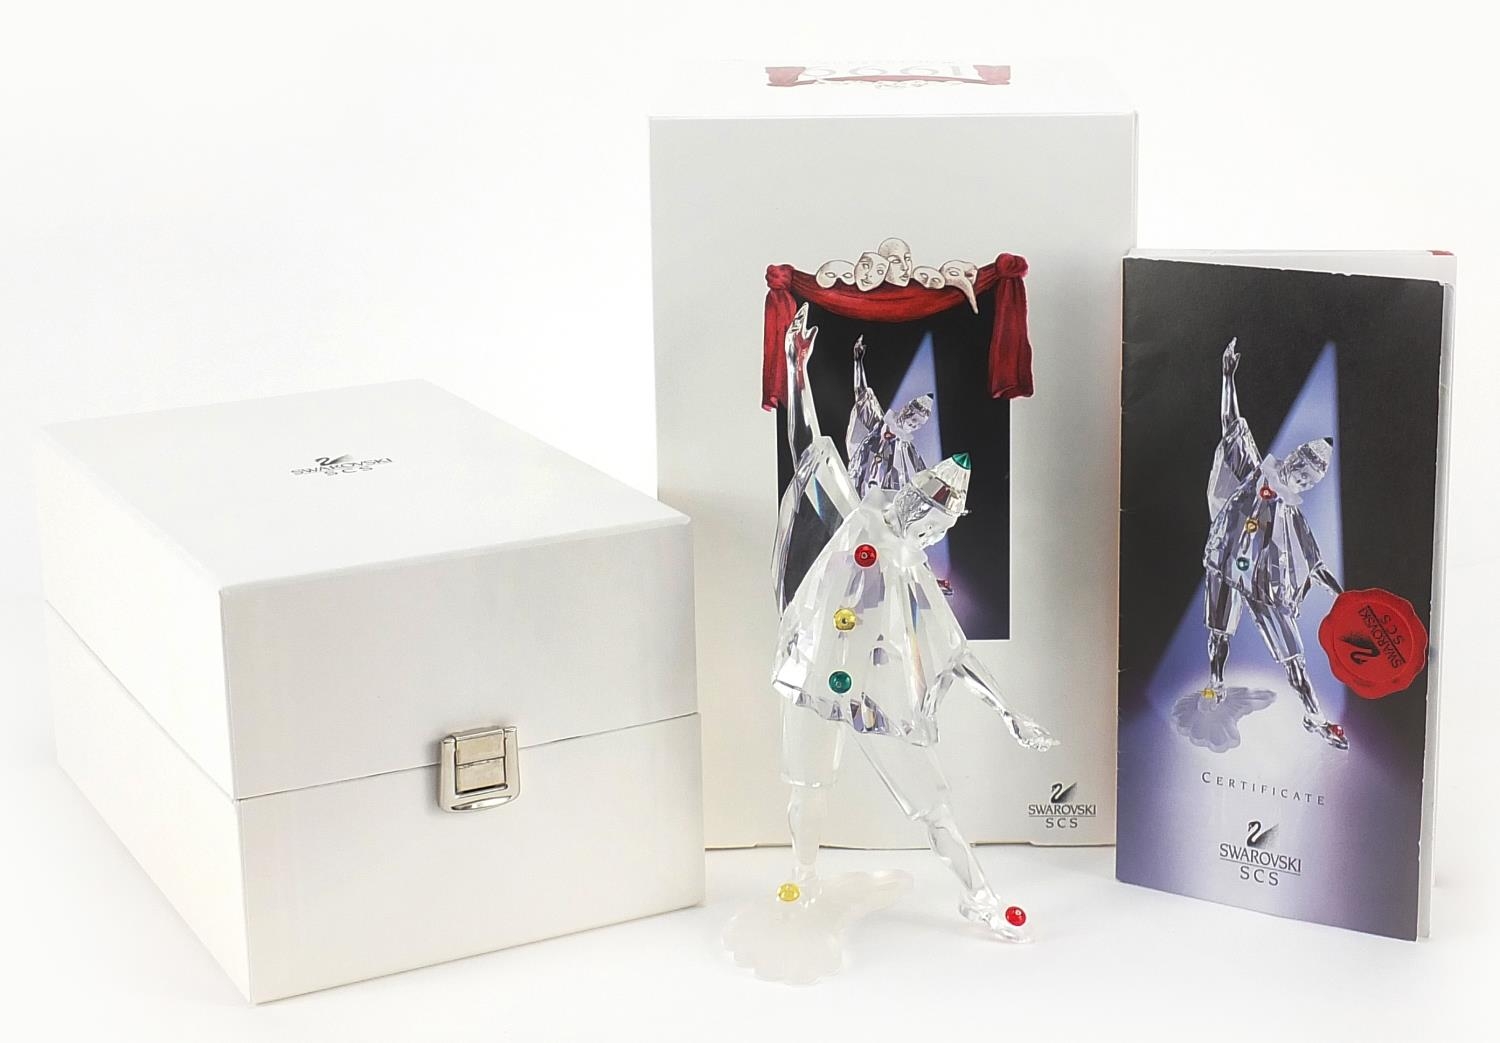 Swarovski crystal Masquerade Pierrot figure with box, 20cm high - Image 6 of 6